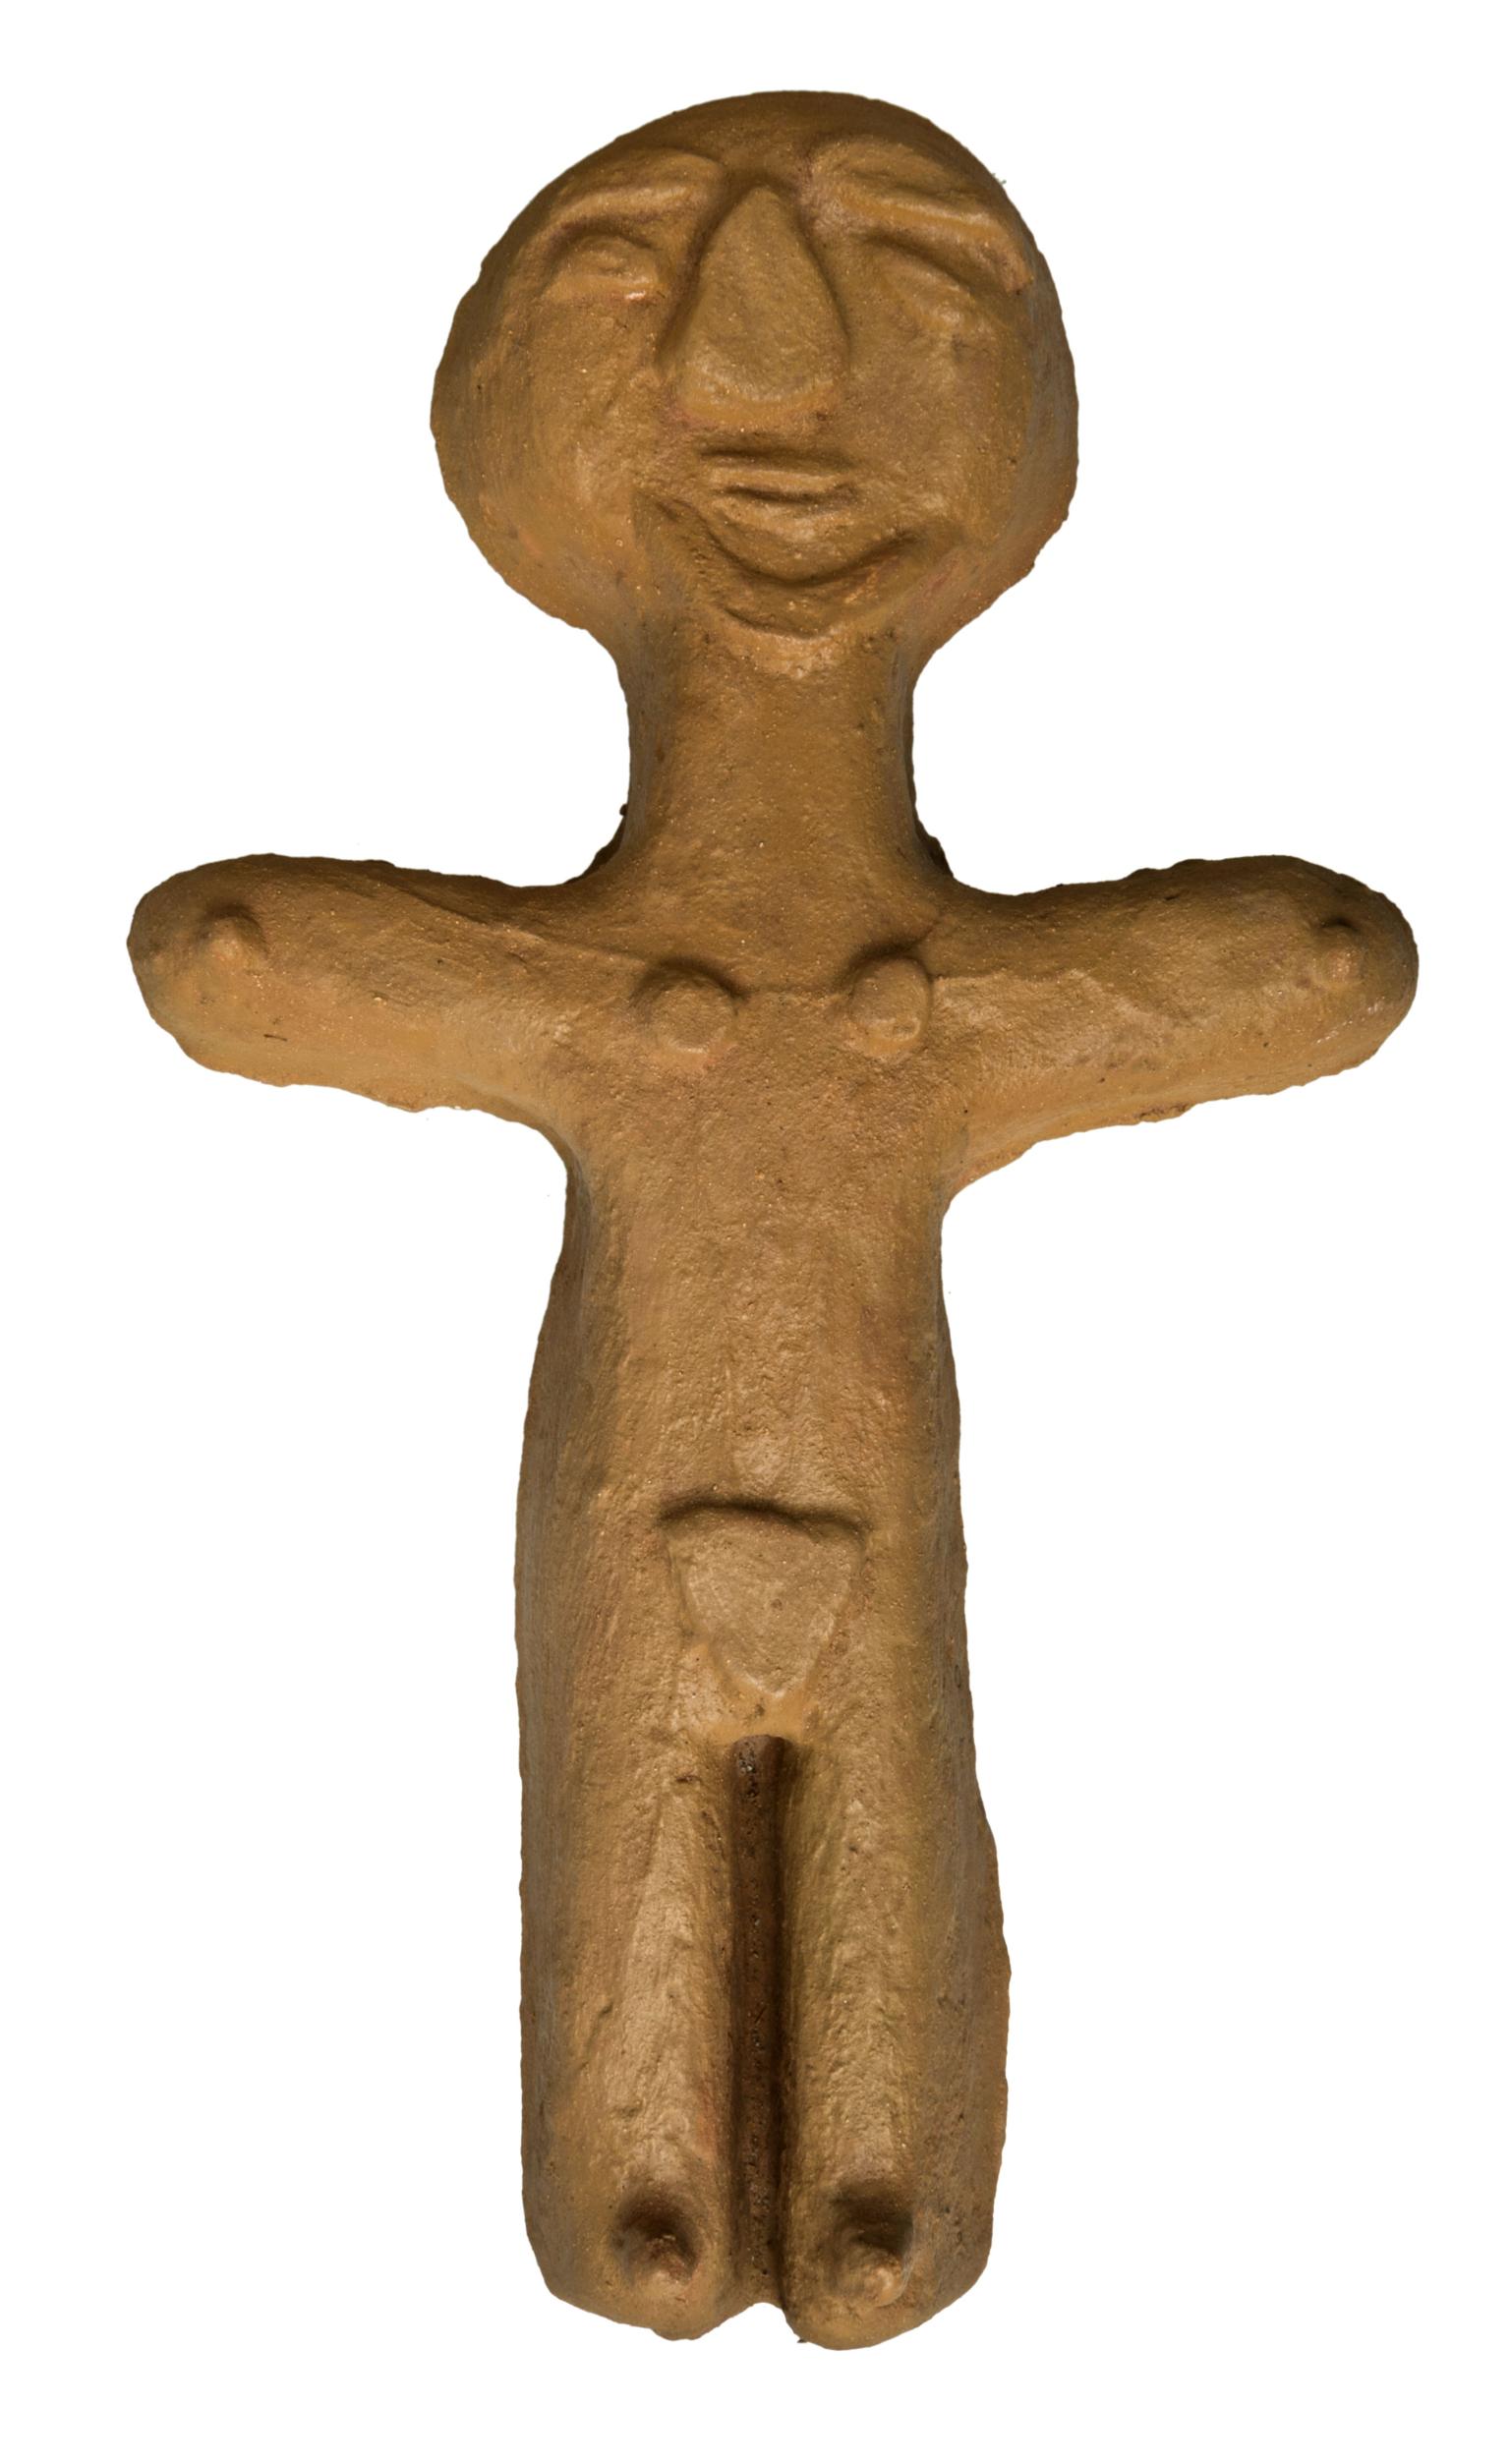 Sculpture of human-like figure.